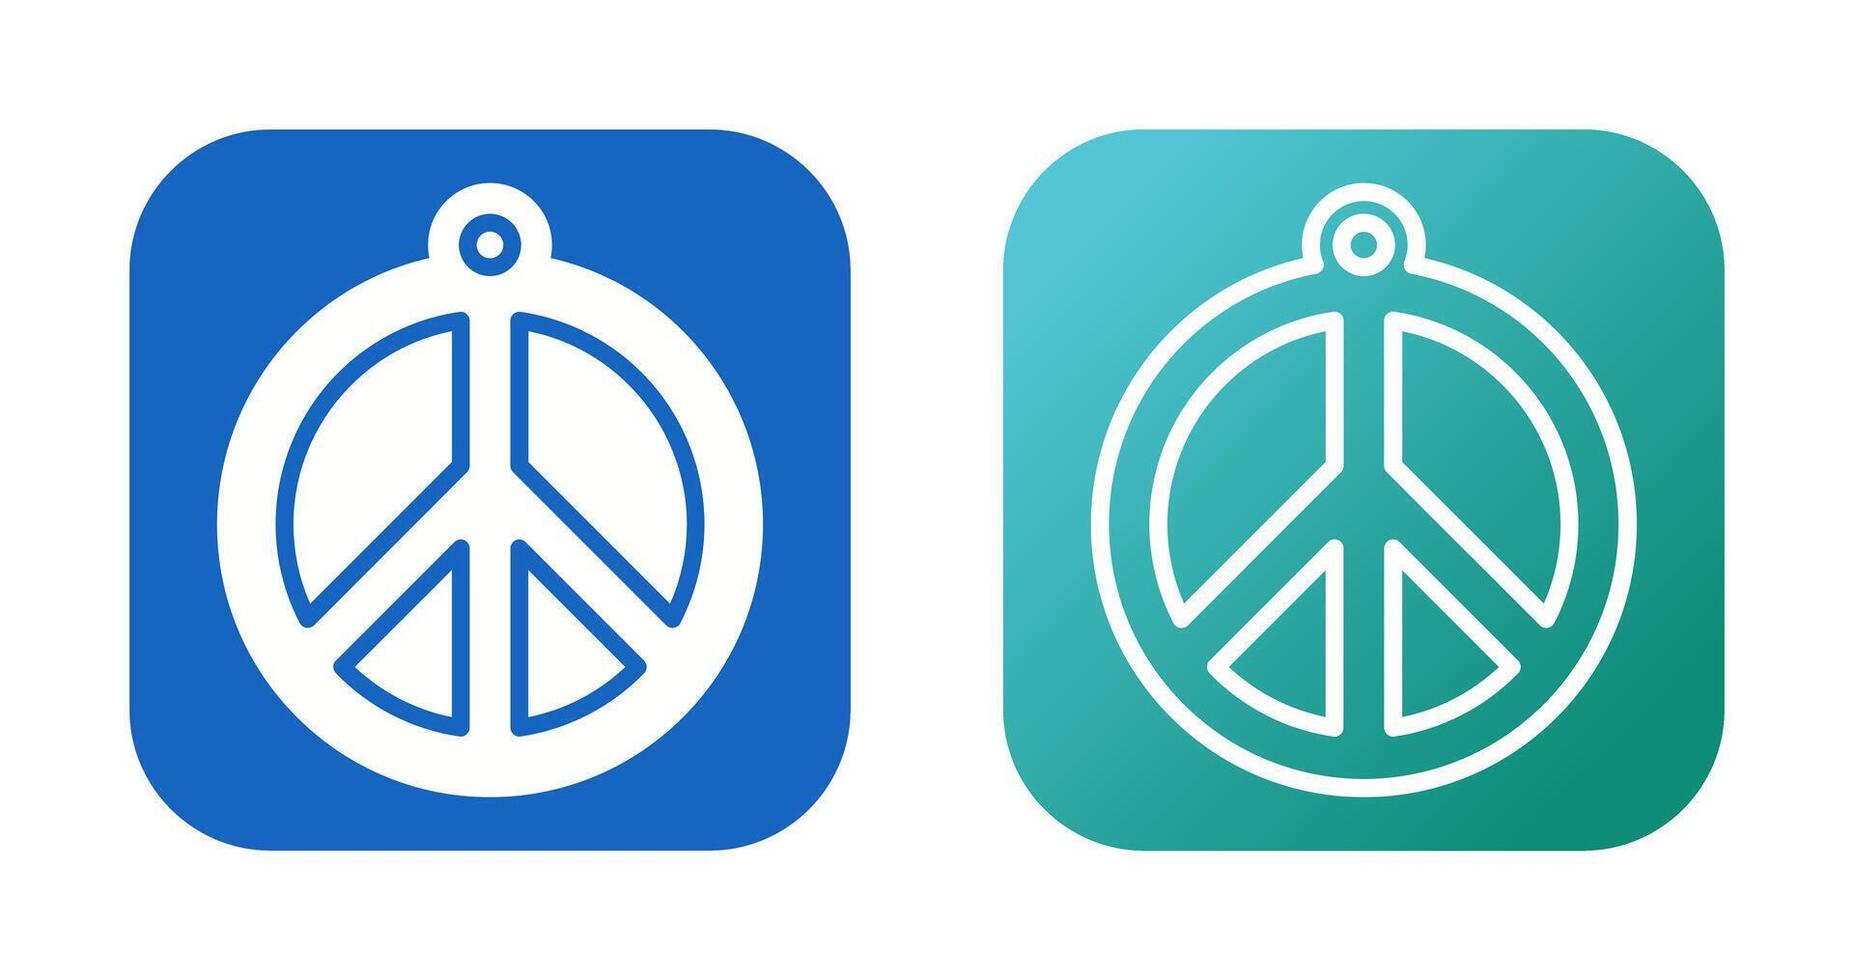 fred symbol vektor ikon